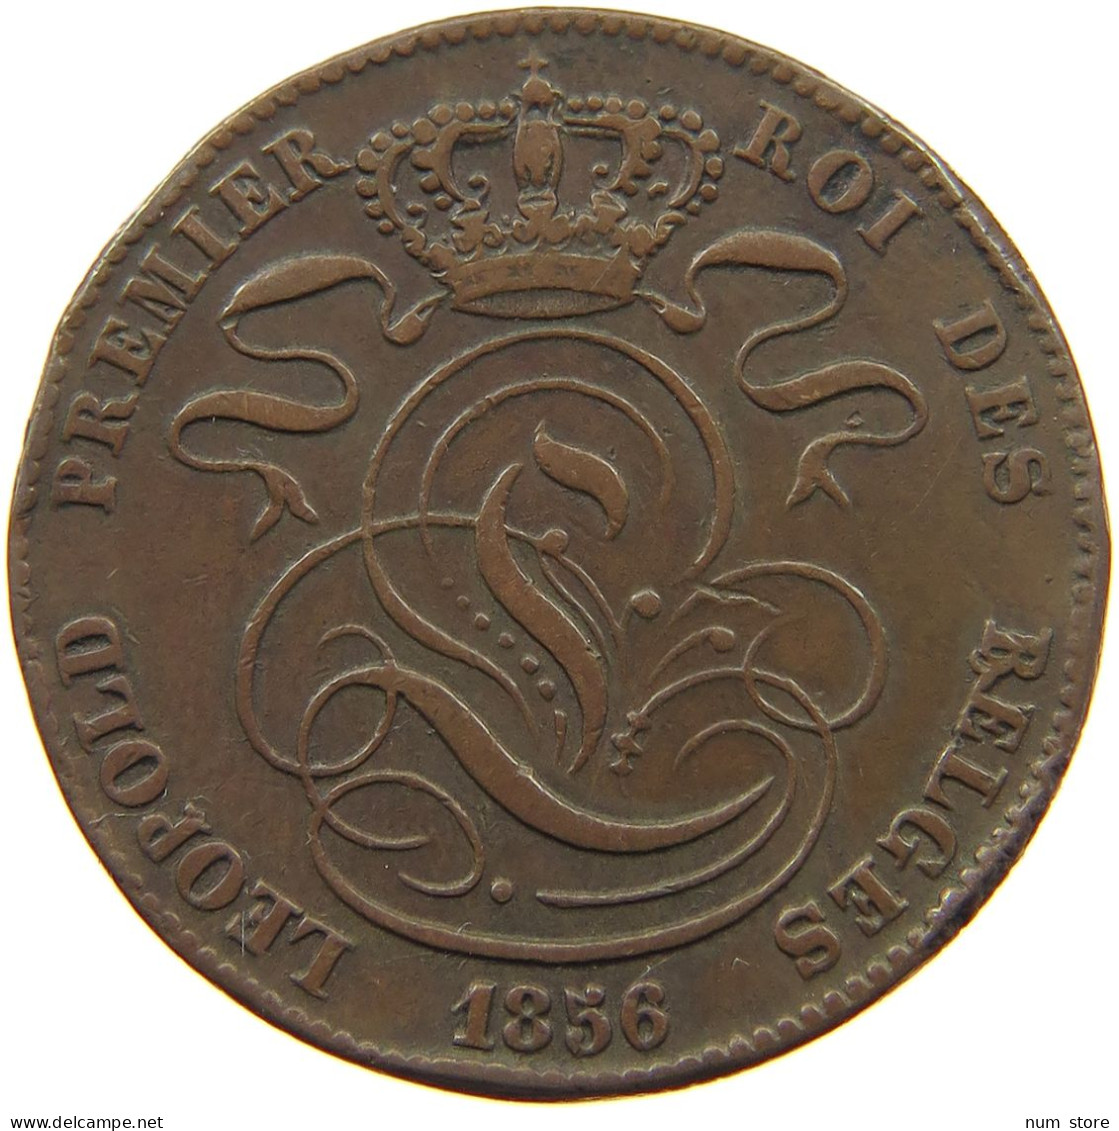 BELGIUM 5 CENTIMES 1856  #t132 0625 - 5 Centimes